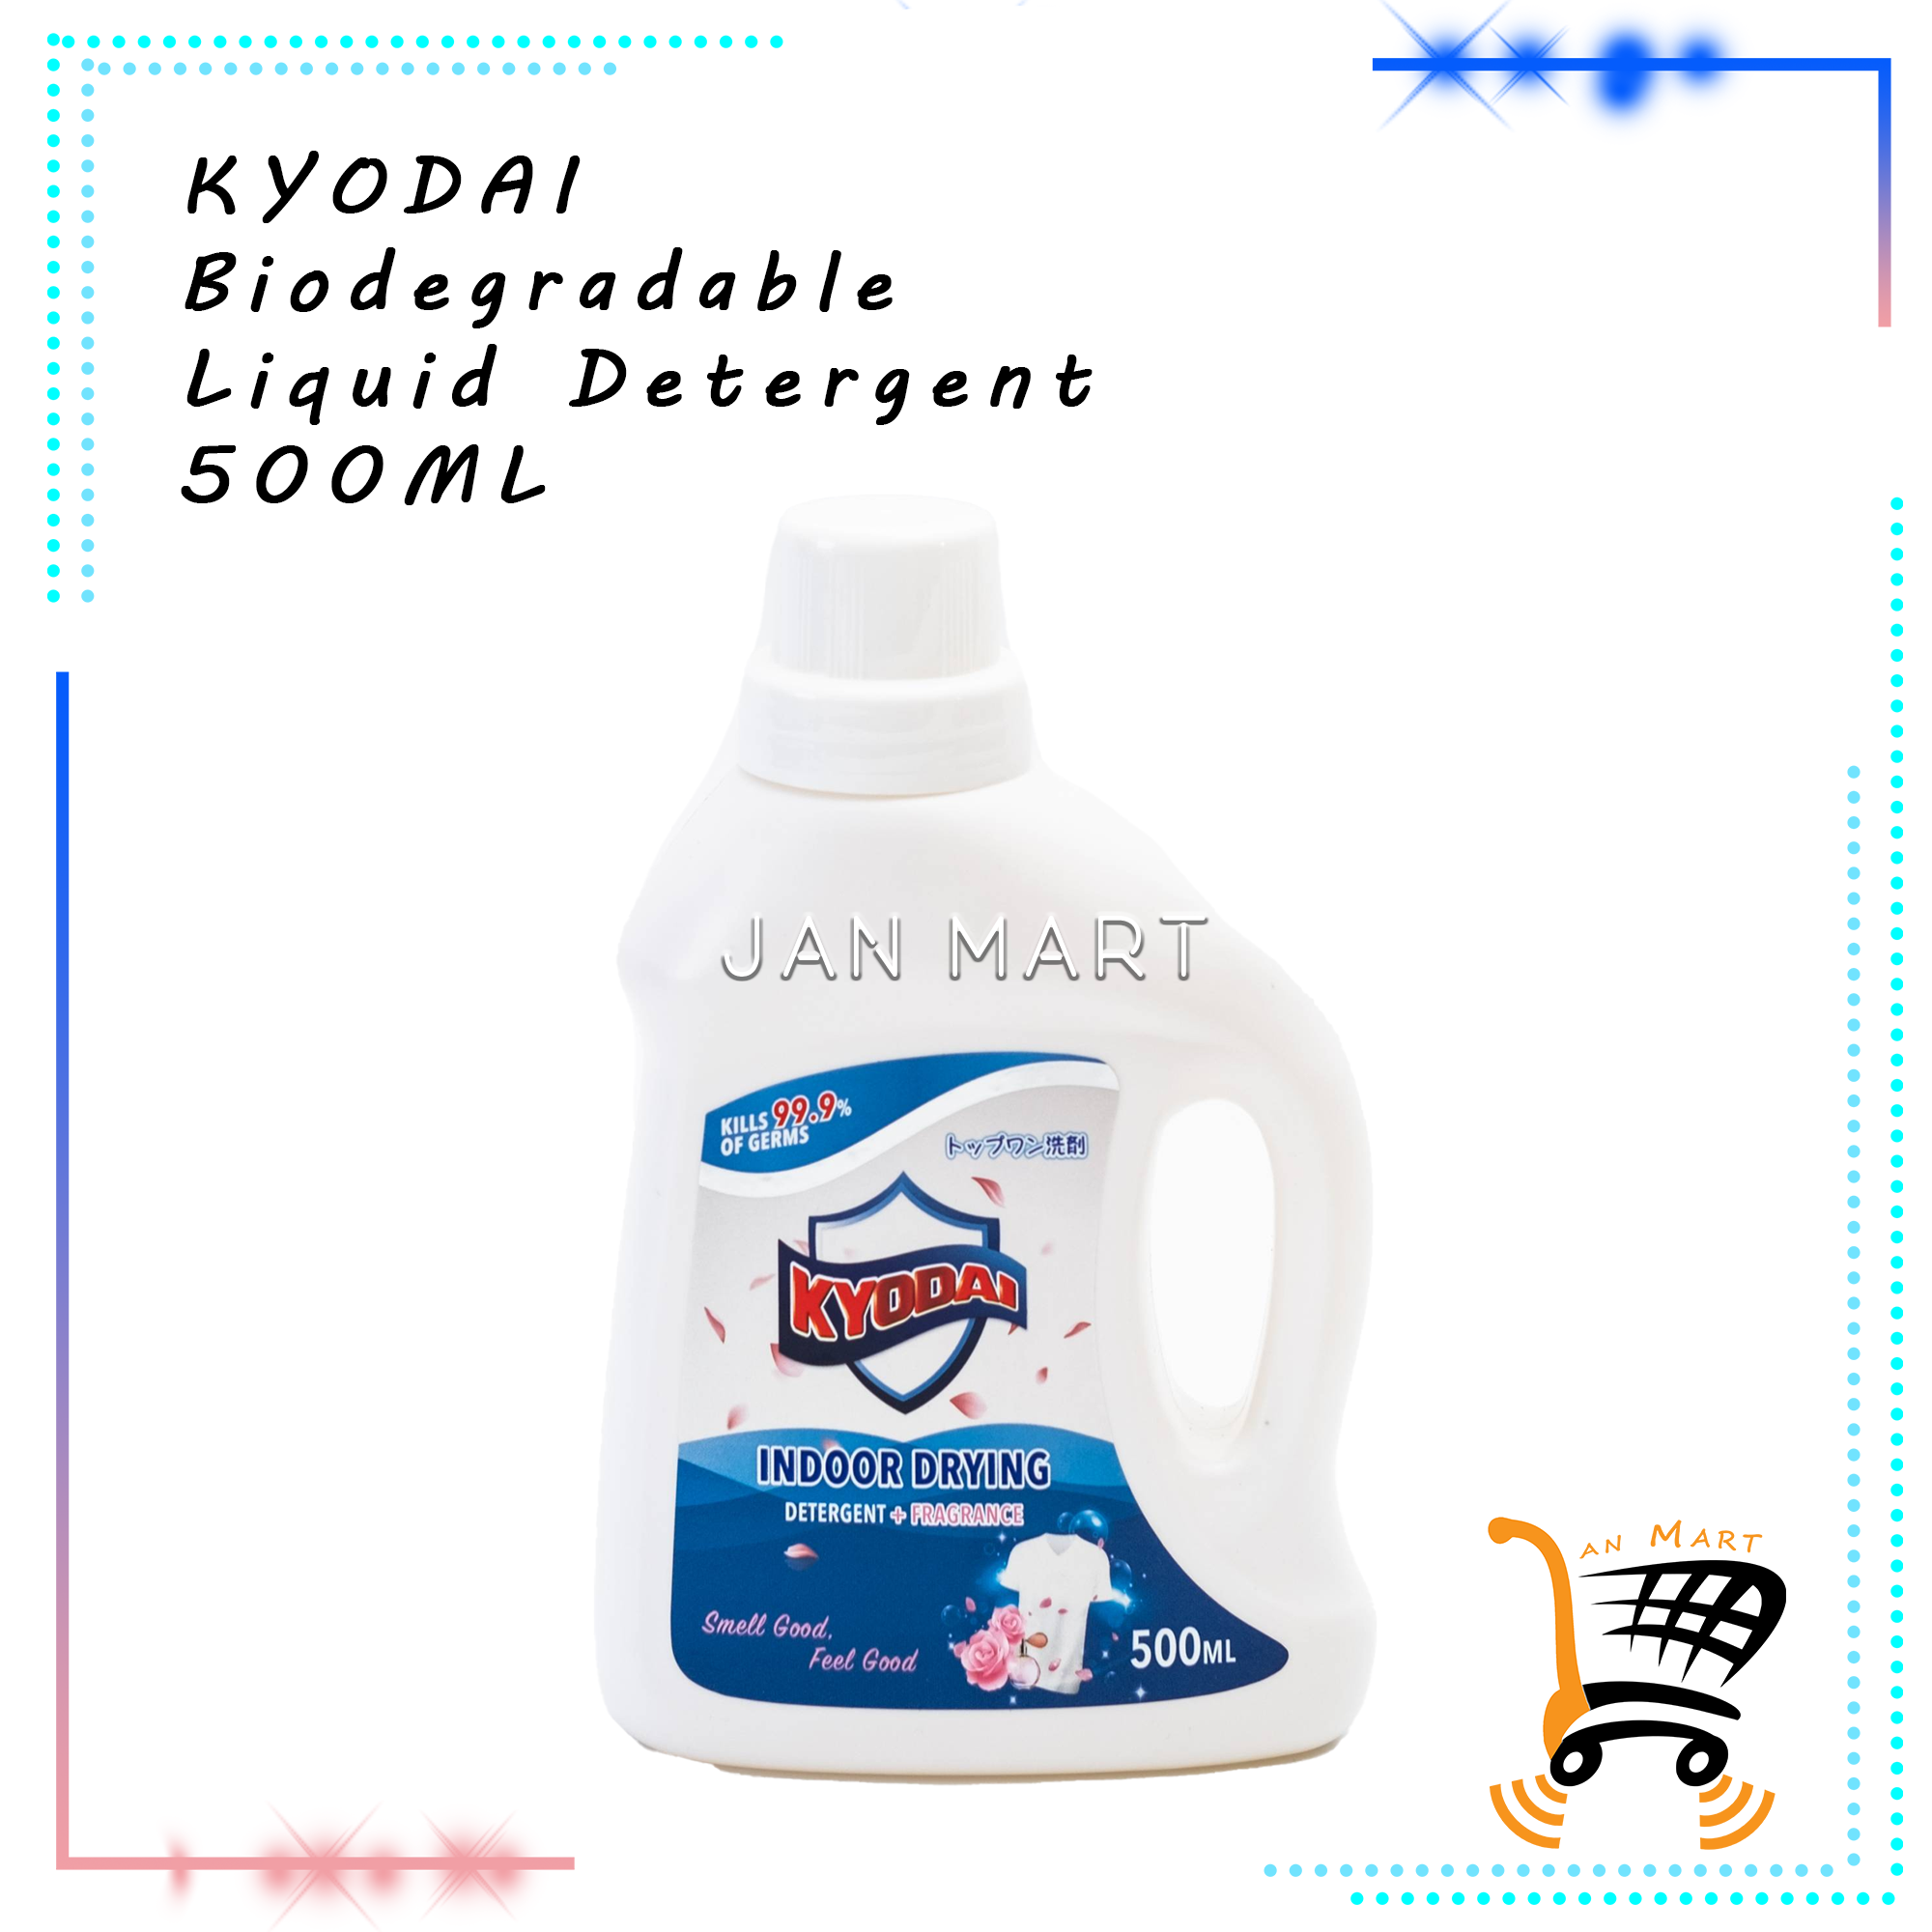 KYODAI Biodegradable Liquid Detergent Indoor Drying 500ML